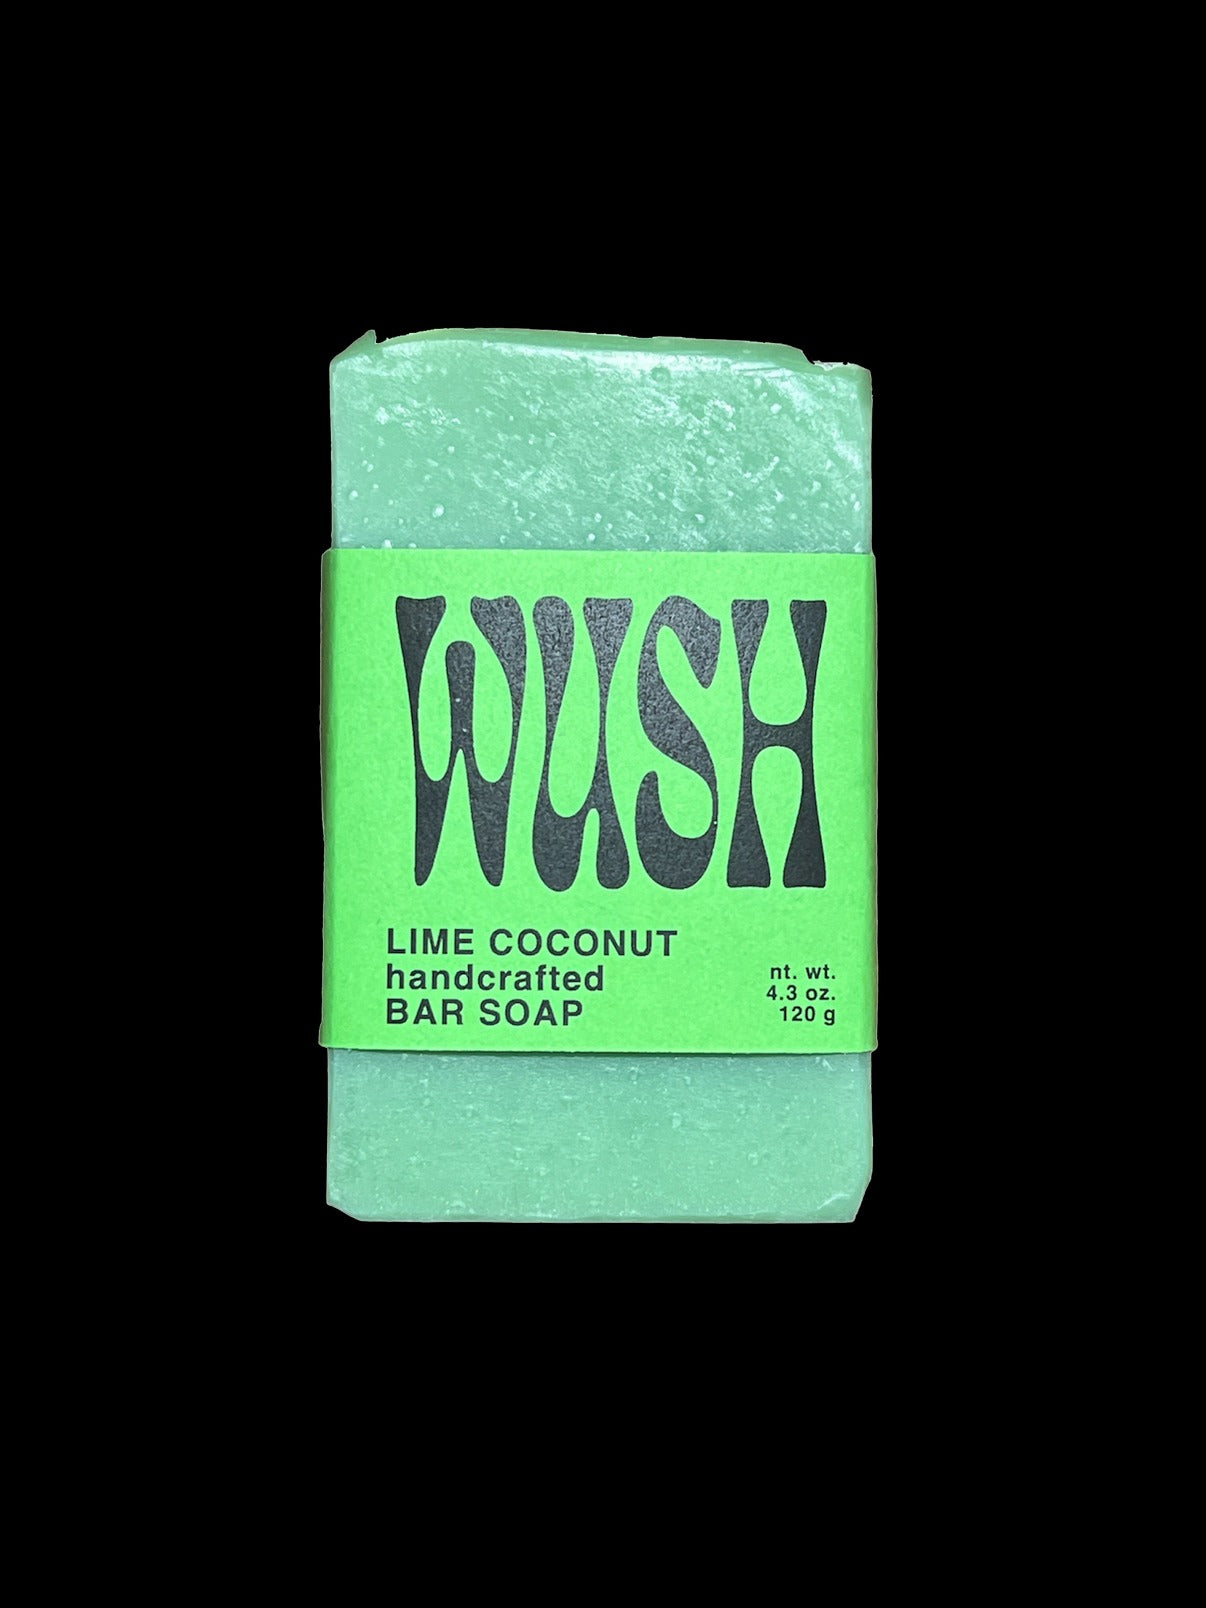 Lime Coconut Bar Soap